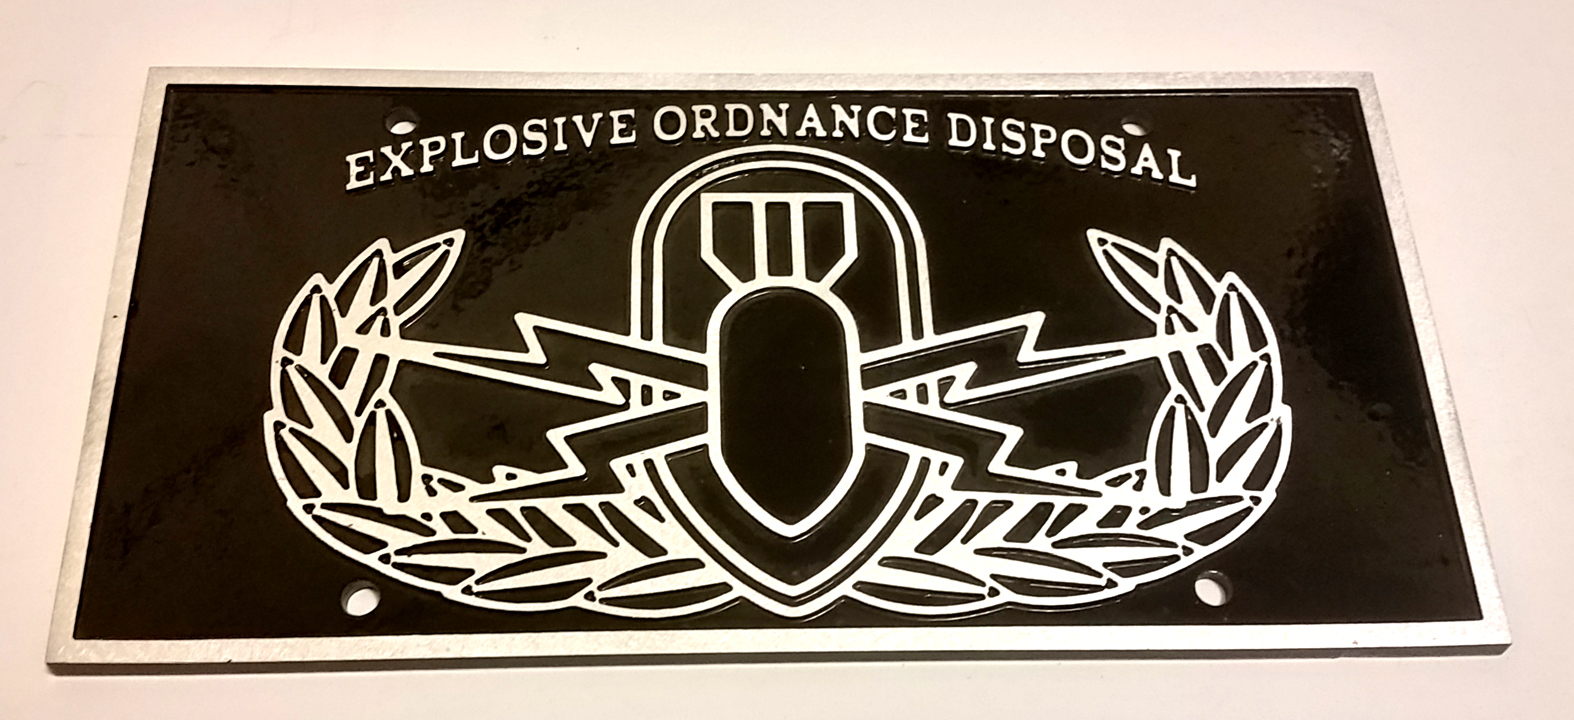 EOD Explosive Ordnance Disposal Cast Aluminum License Plate